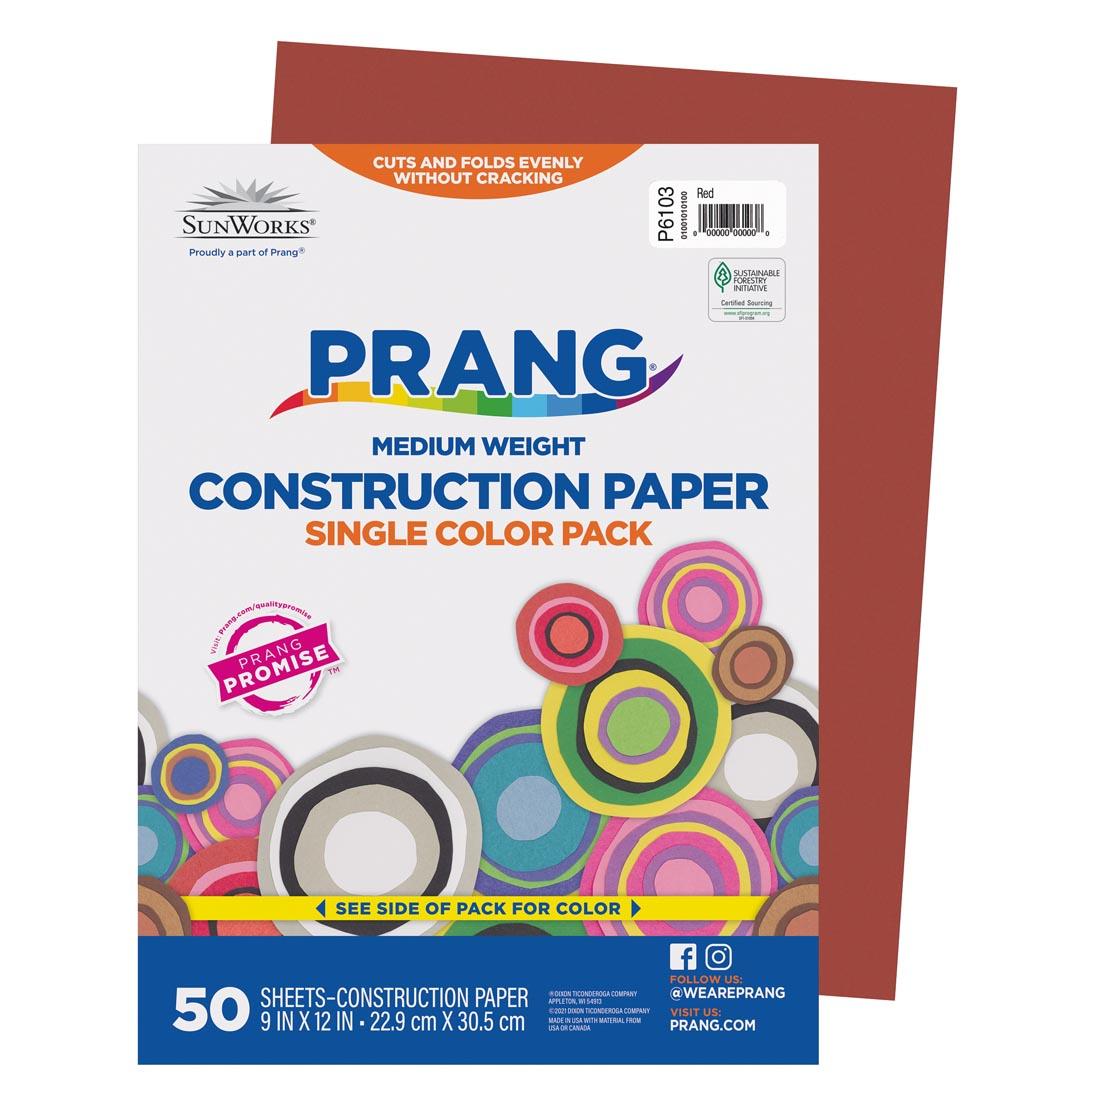 Red Prang/Sunworks Construction Paper